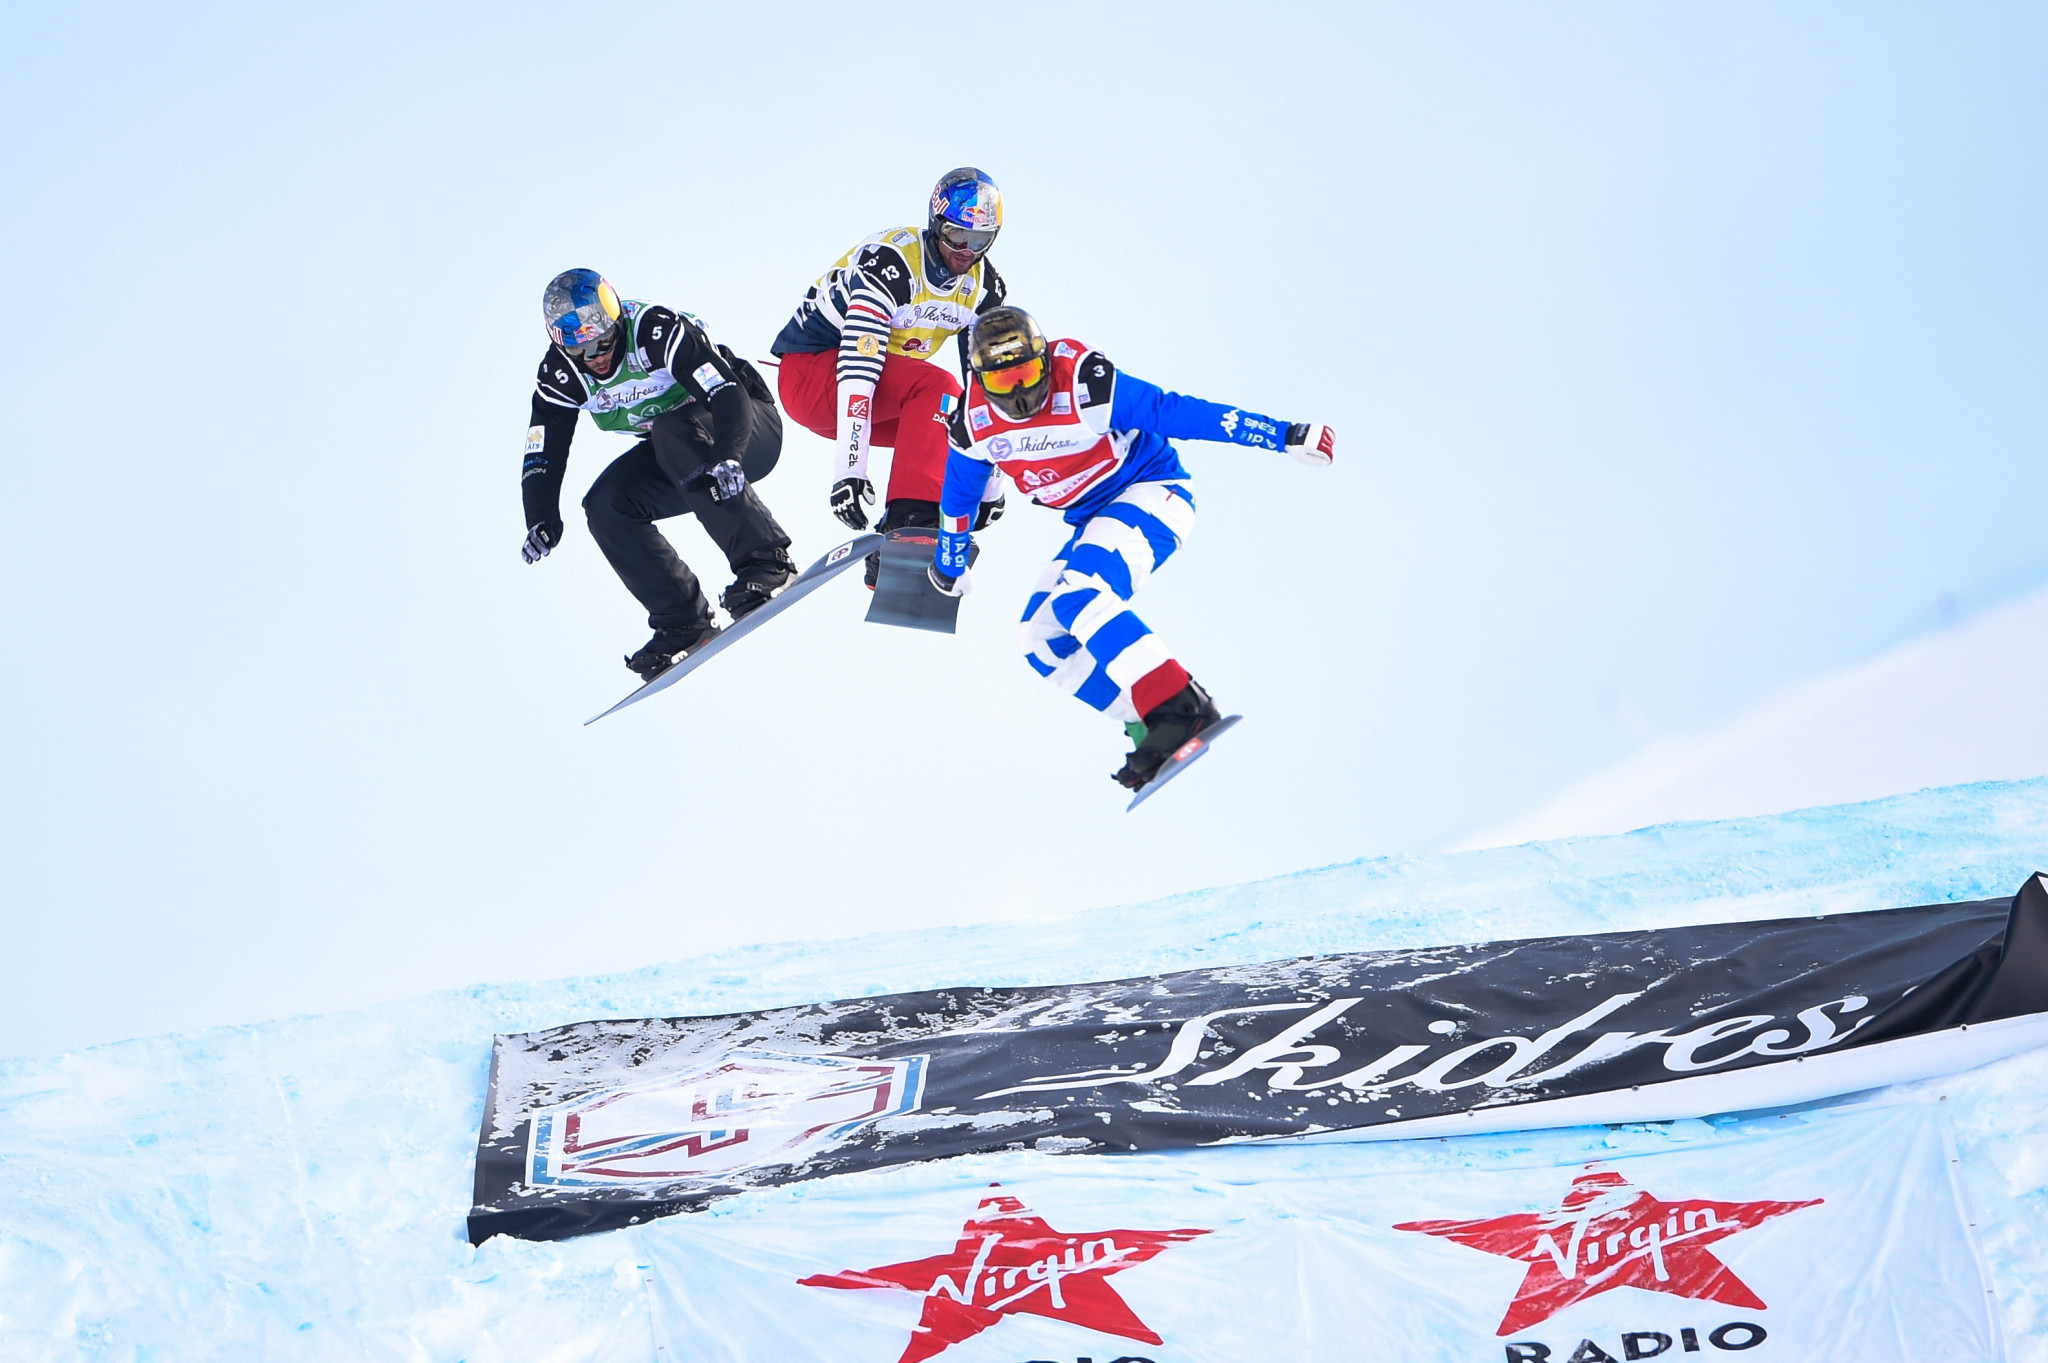 FIS Snowboard Cross World Cup season moves to new Italian venue